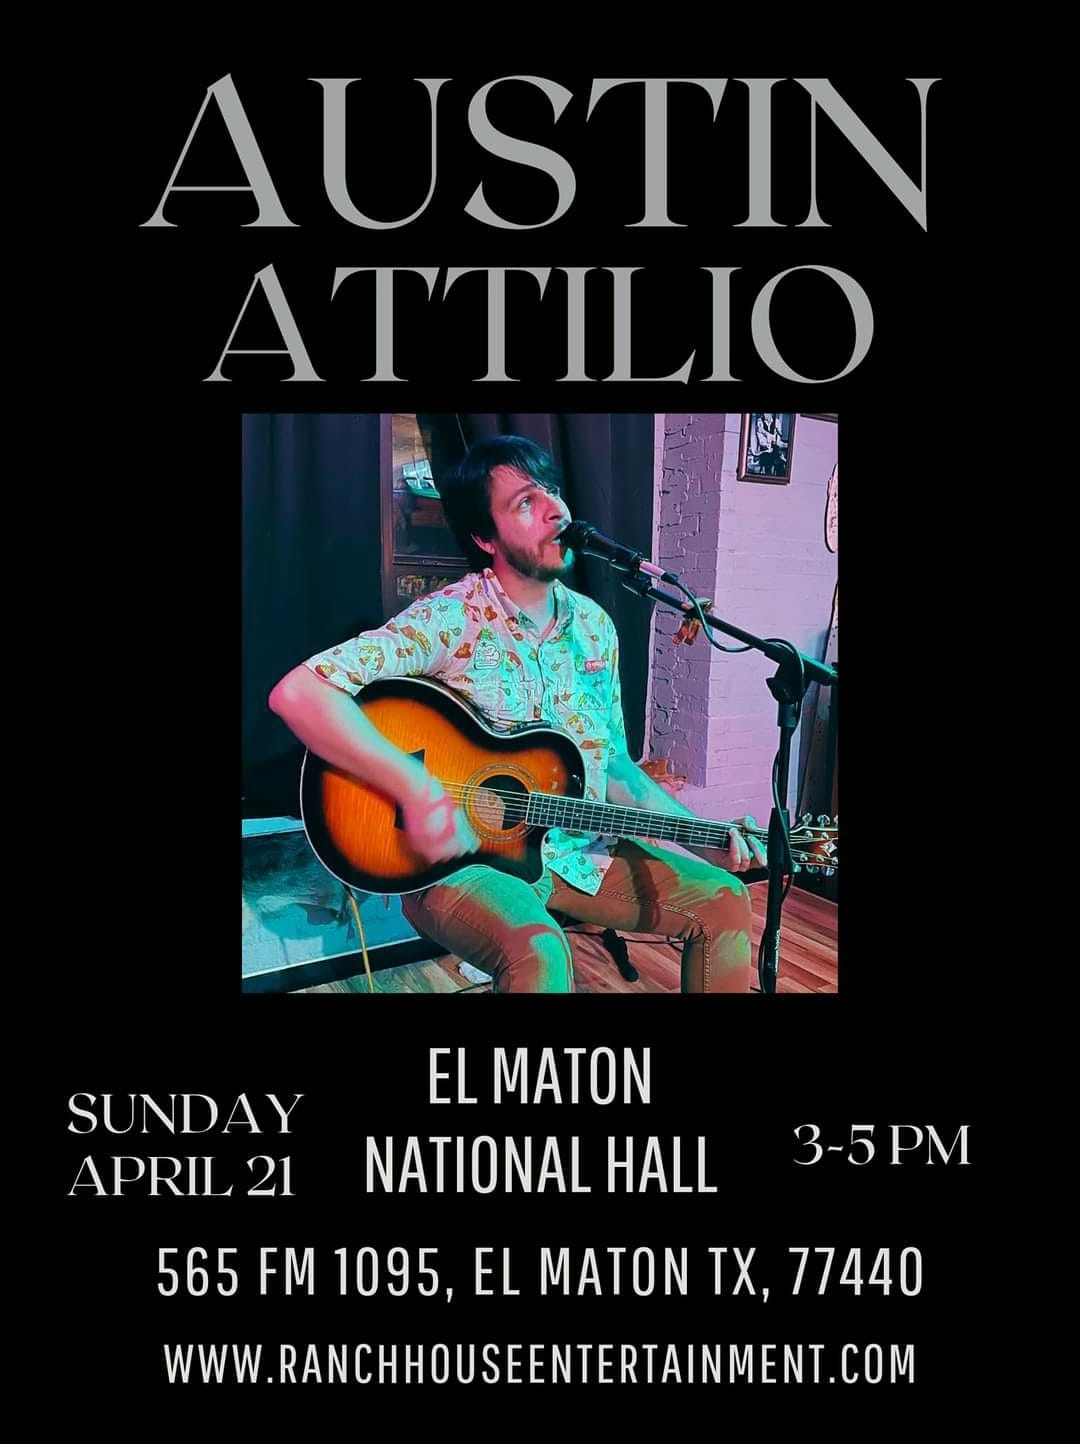 Austin Attilio Live At The Hall - Sunday, April 21st - 3pm to 5pm